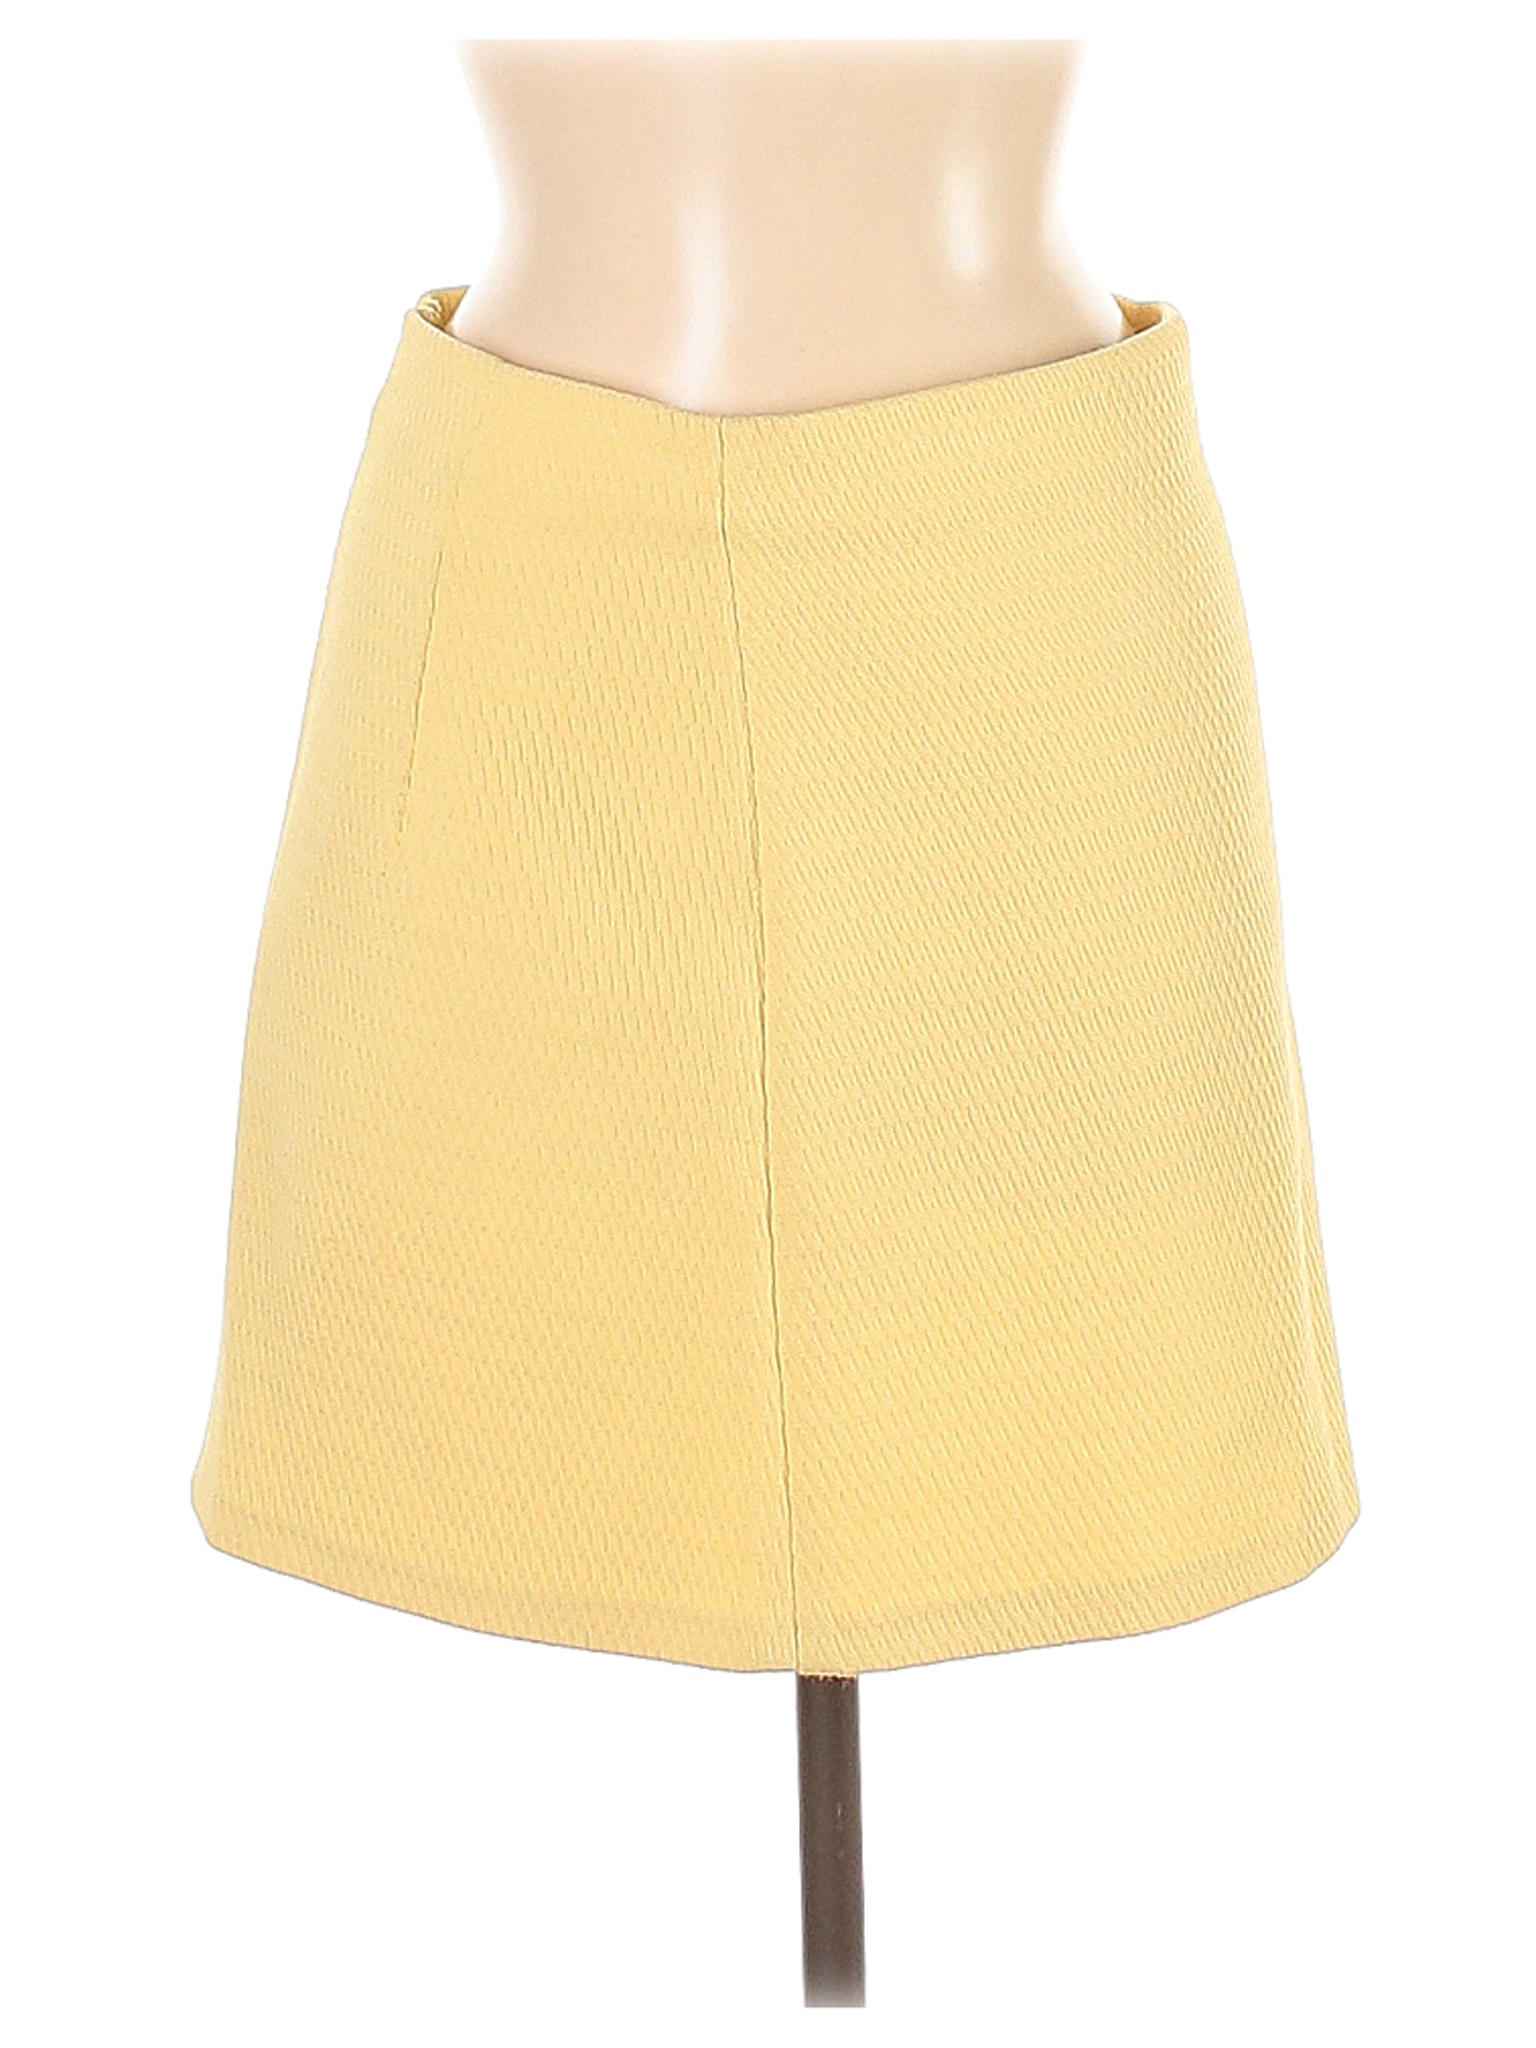 Zara Yellow Casual Skirt Size M - 20% off | thredUP